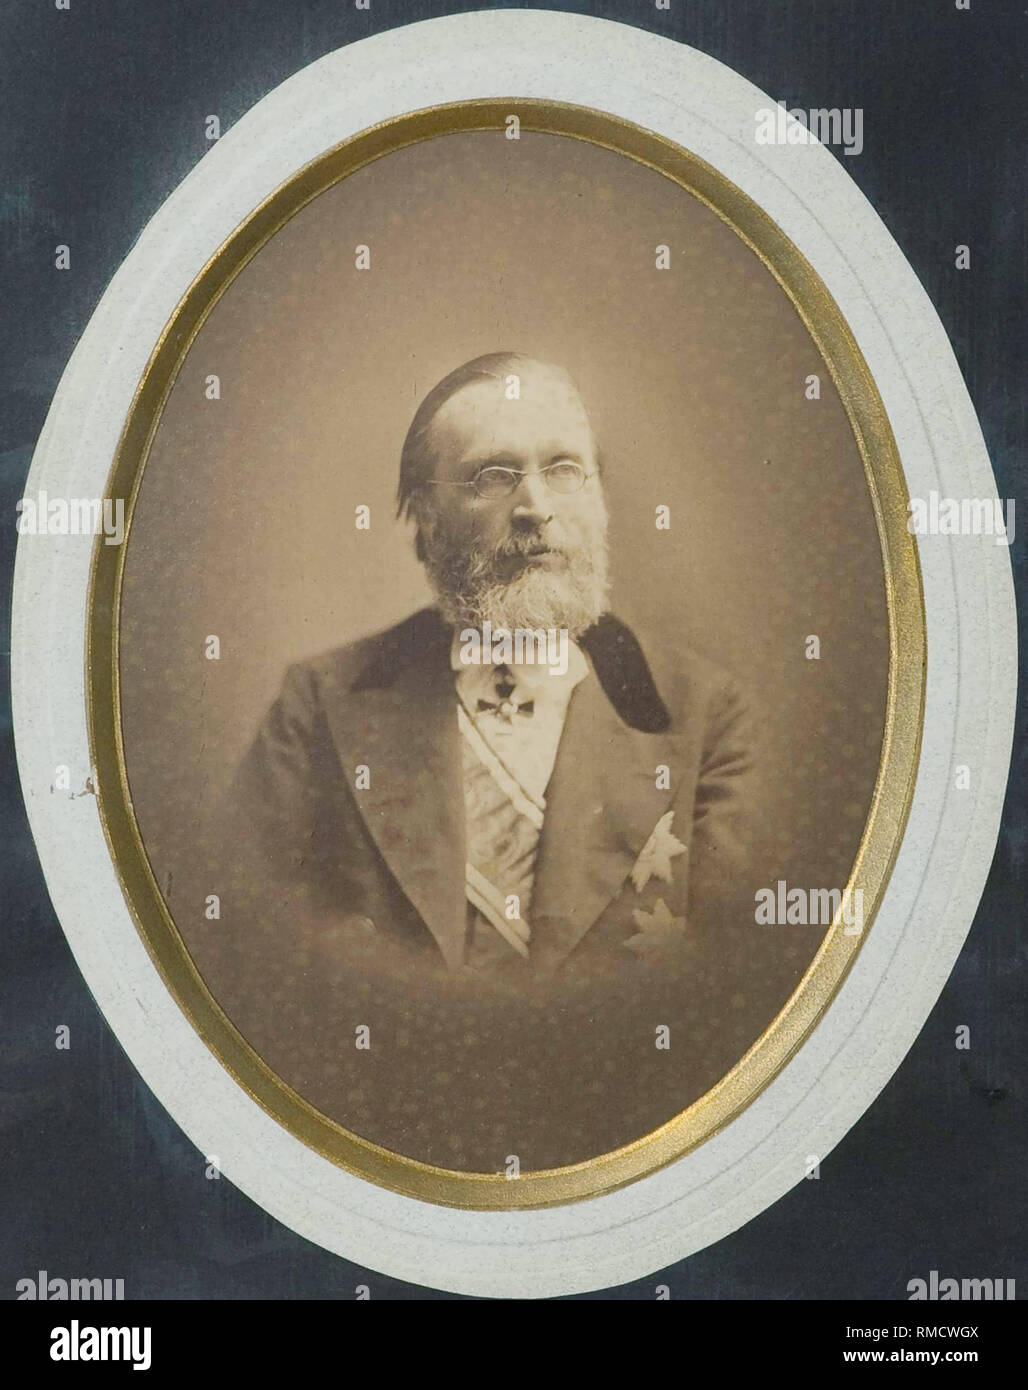 Porträt des Autors Vladimir Rodislavsky (1828-1885). Albumin Photo Stockfoto